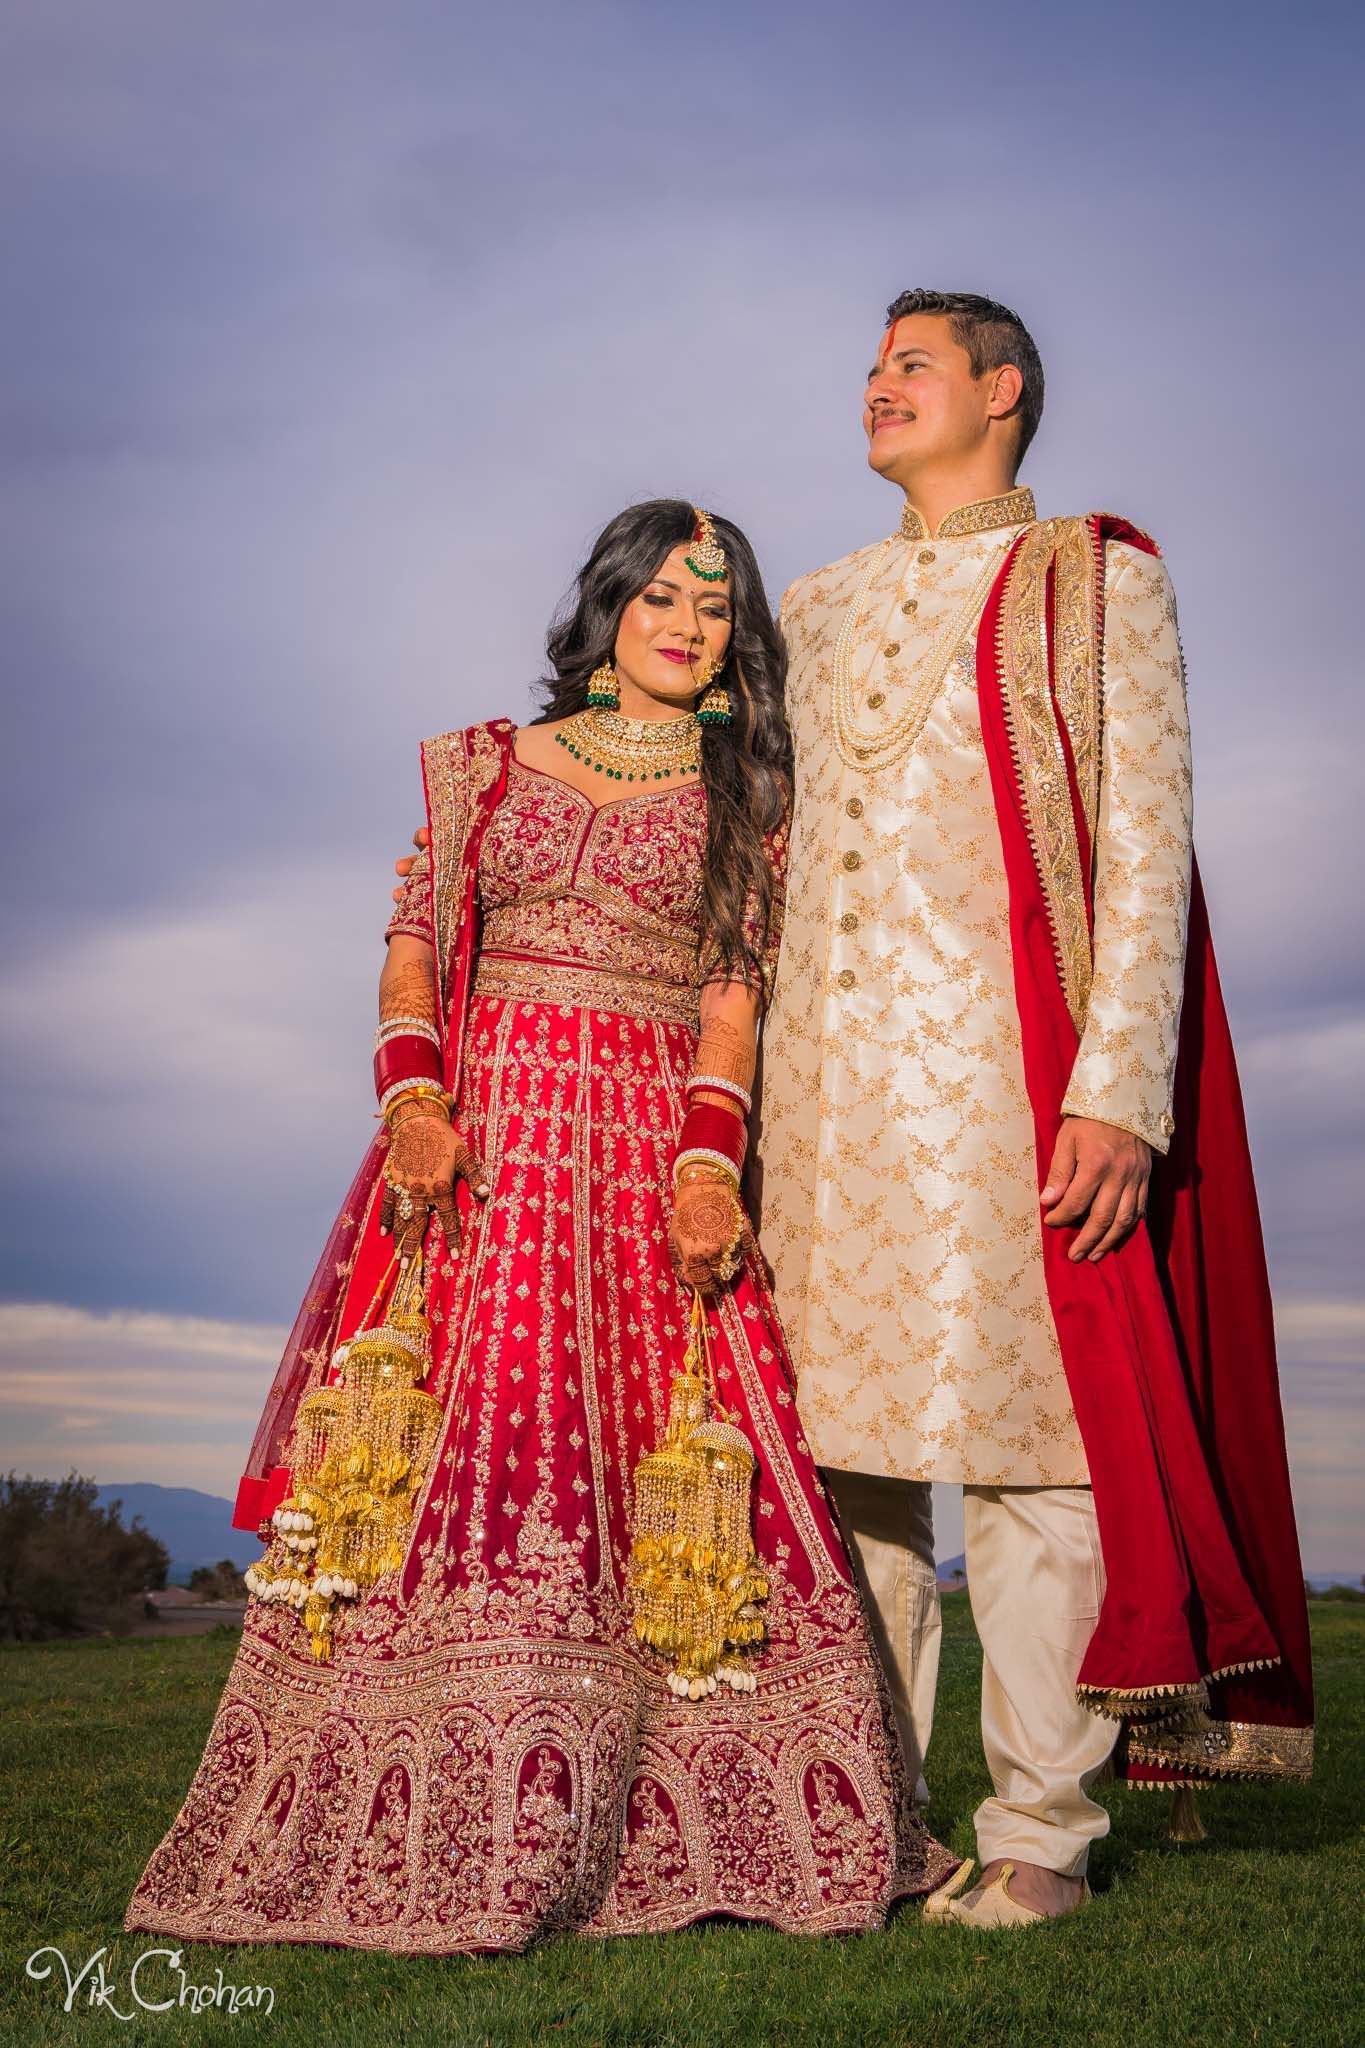 2022-06-09-Annie-&-Steven-Las-Vegas-Indian-Wedding-Ceremony-Photography-Vik-Chohan-Photography-Photo-Booth-Social-Media-VCP-240.jpg